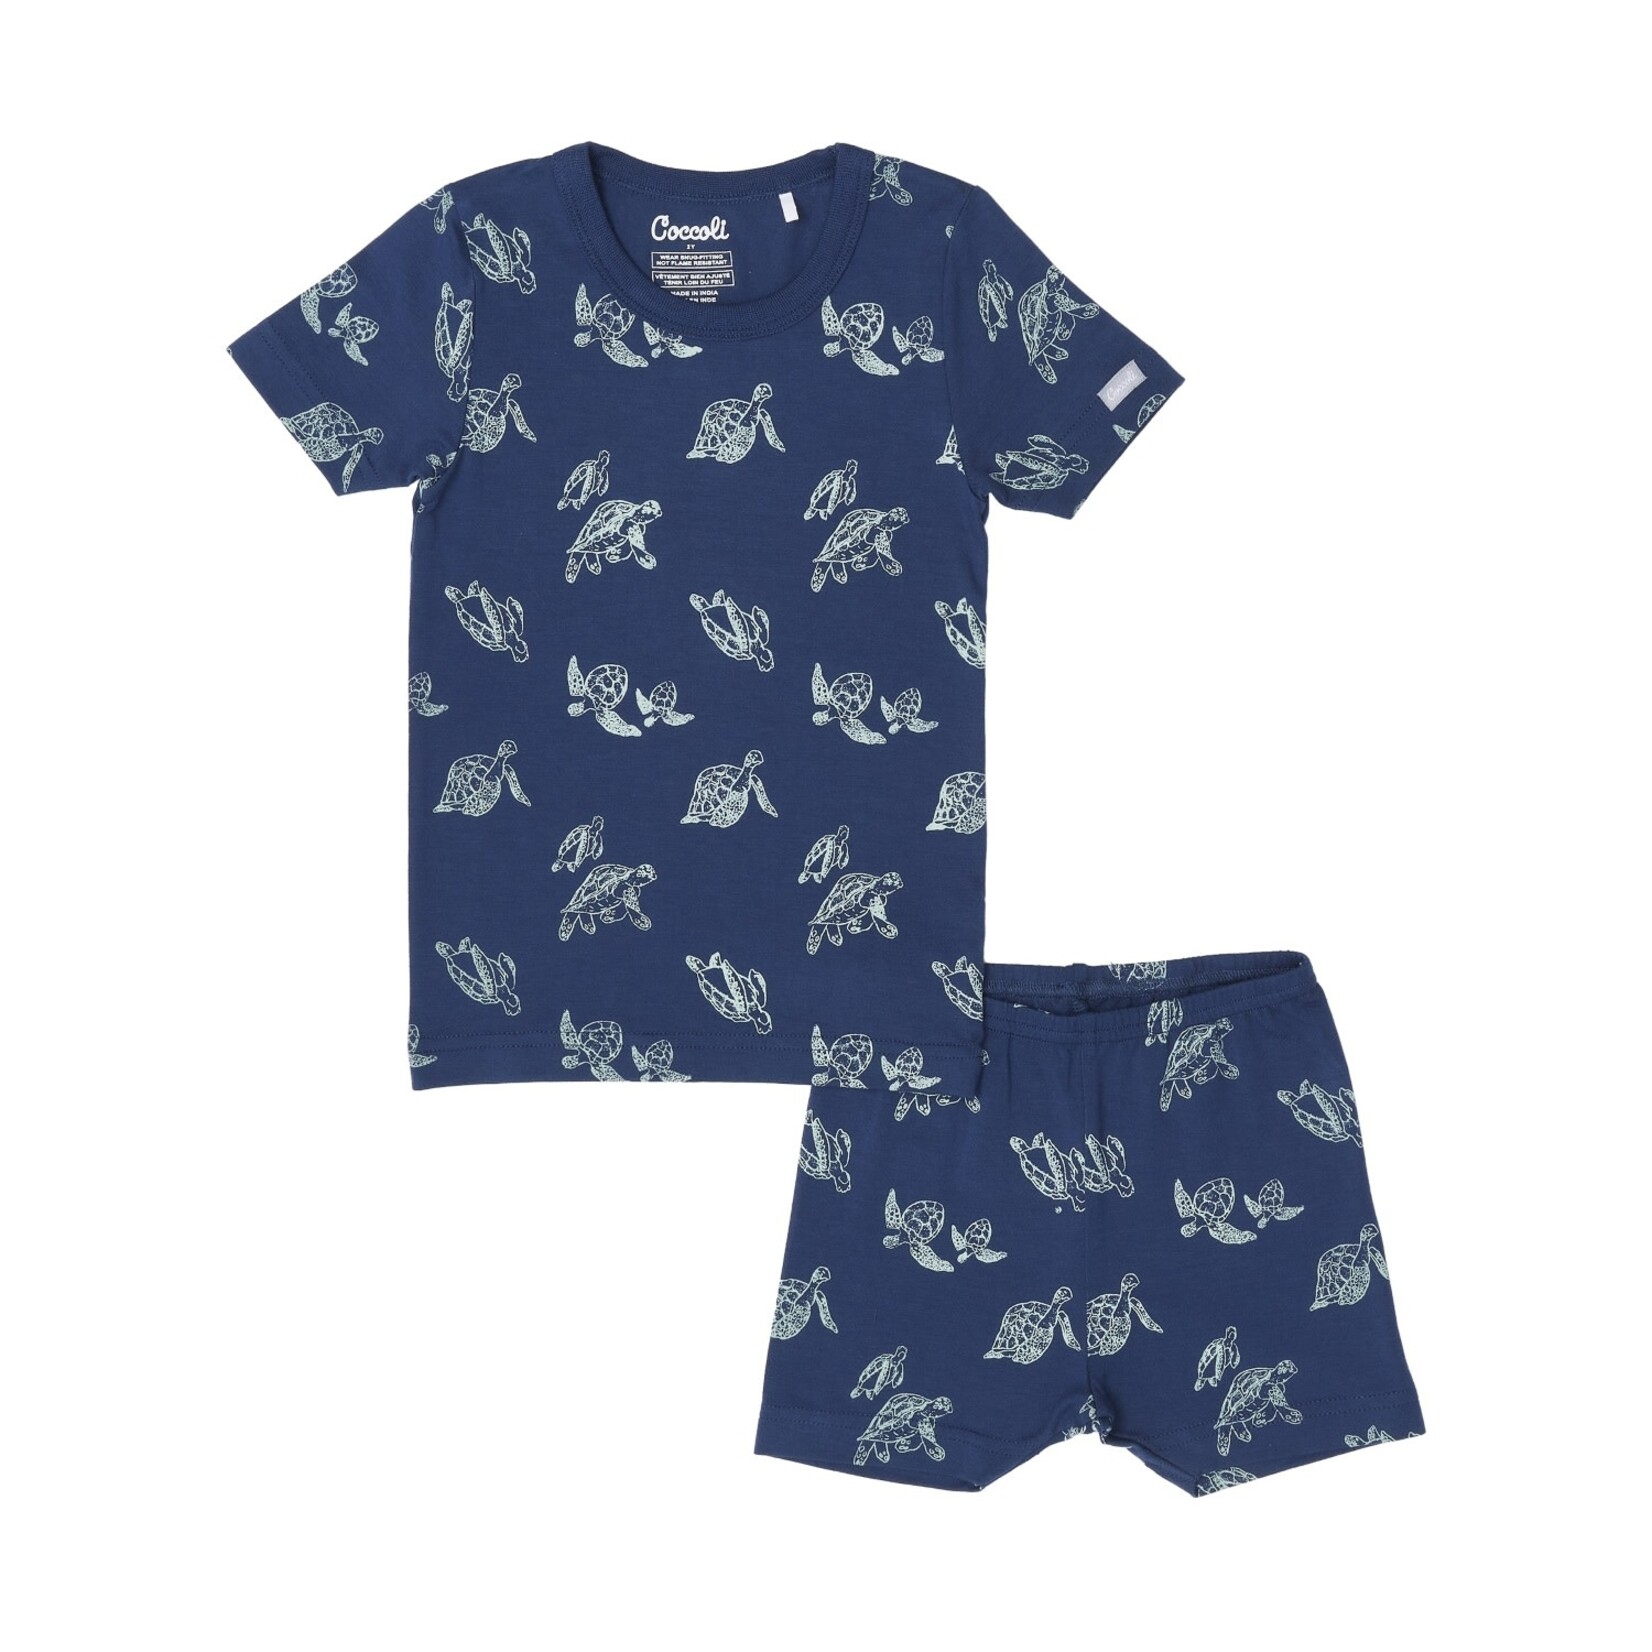 Coccoli COCCOLI - Navy Short Pyjamas Set with Sea Turtle Print (2 pcs.)